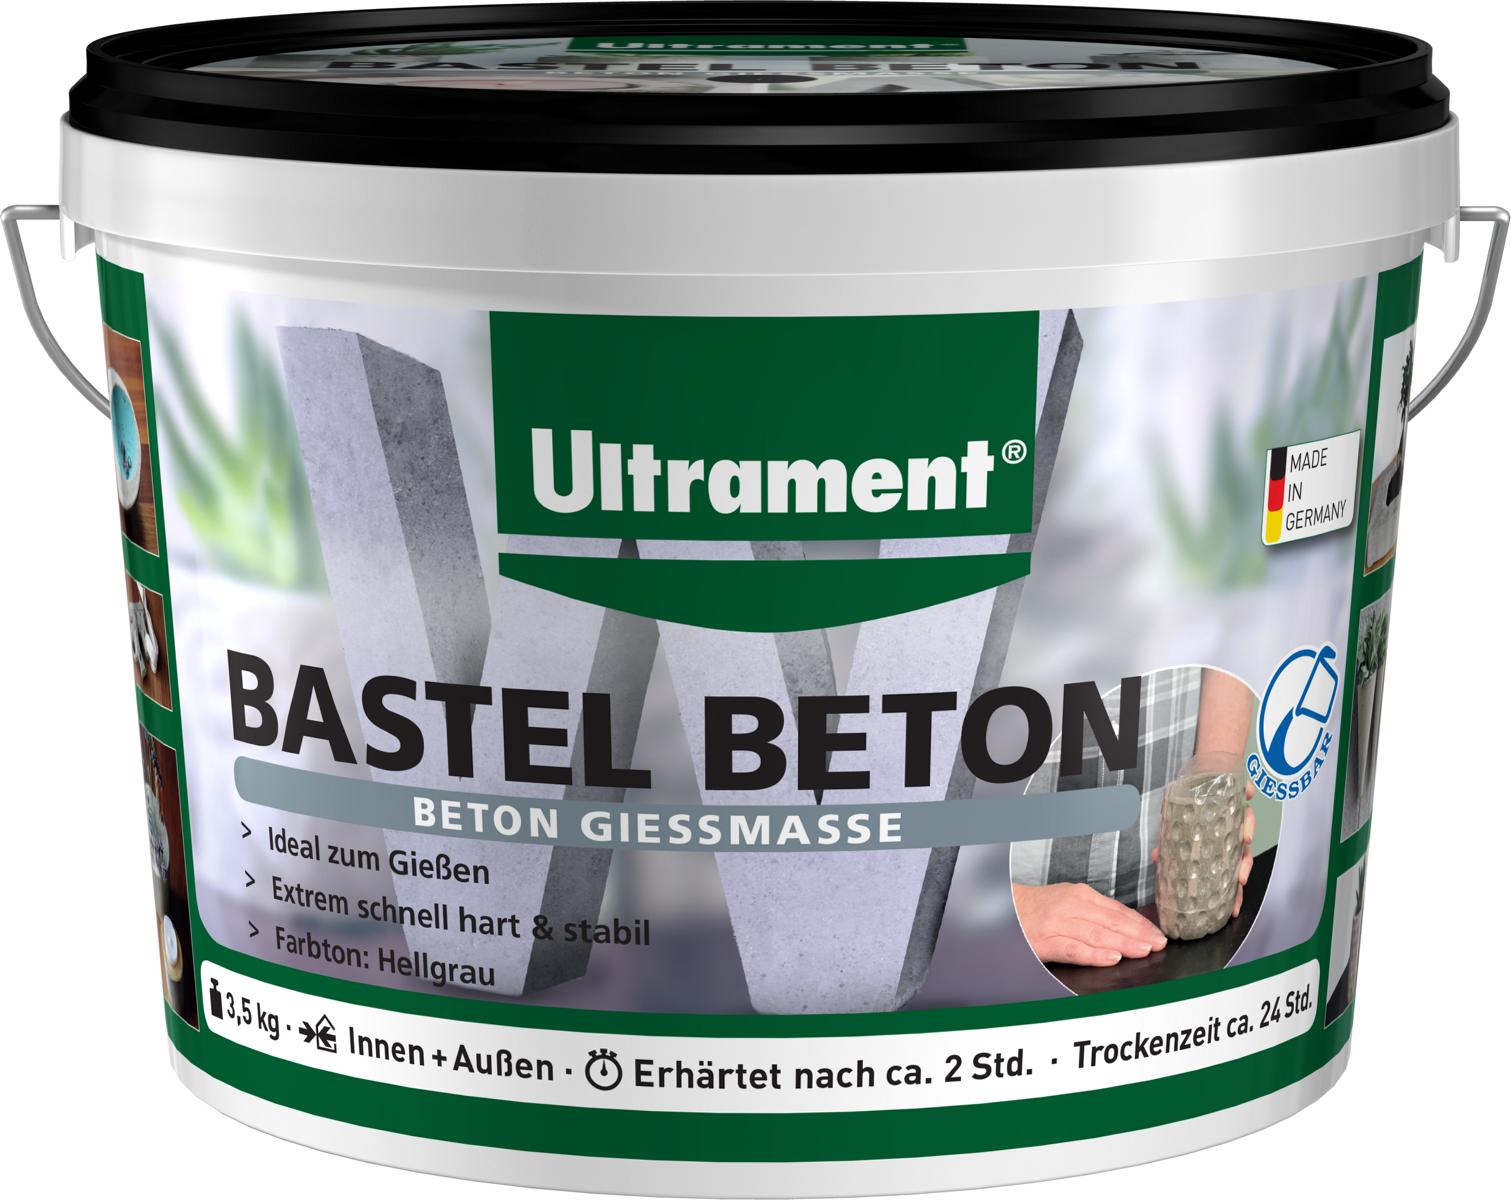 Ultrament Bastel Beton hellgrau, 3,5kg